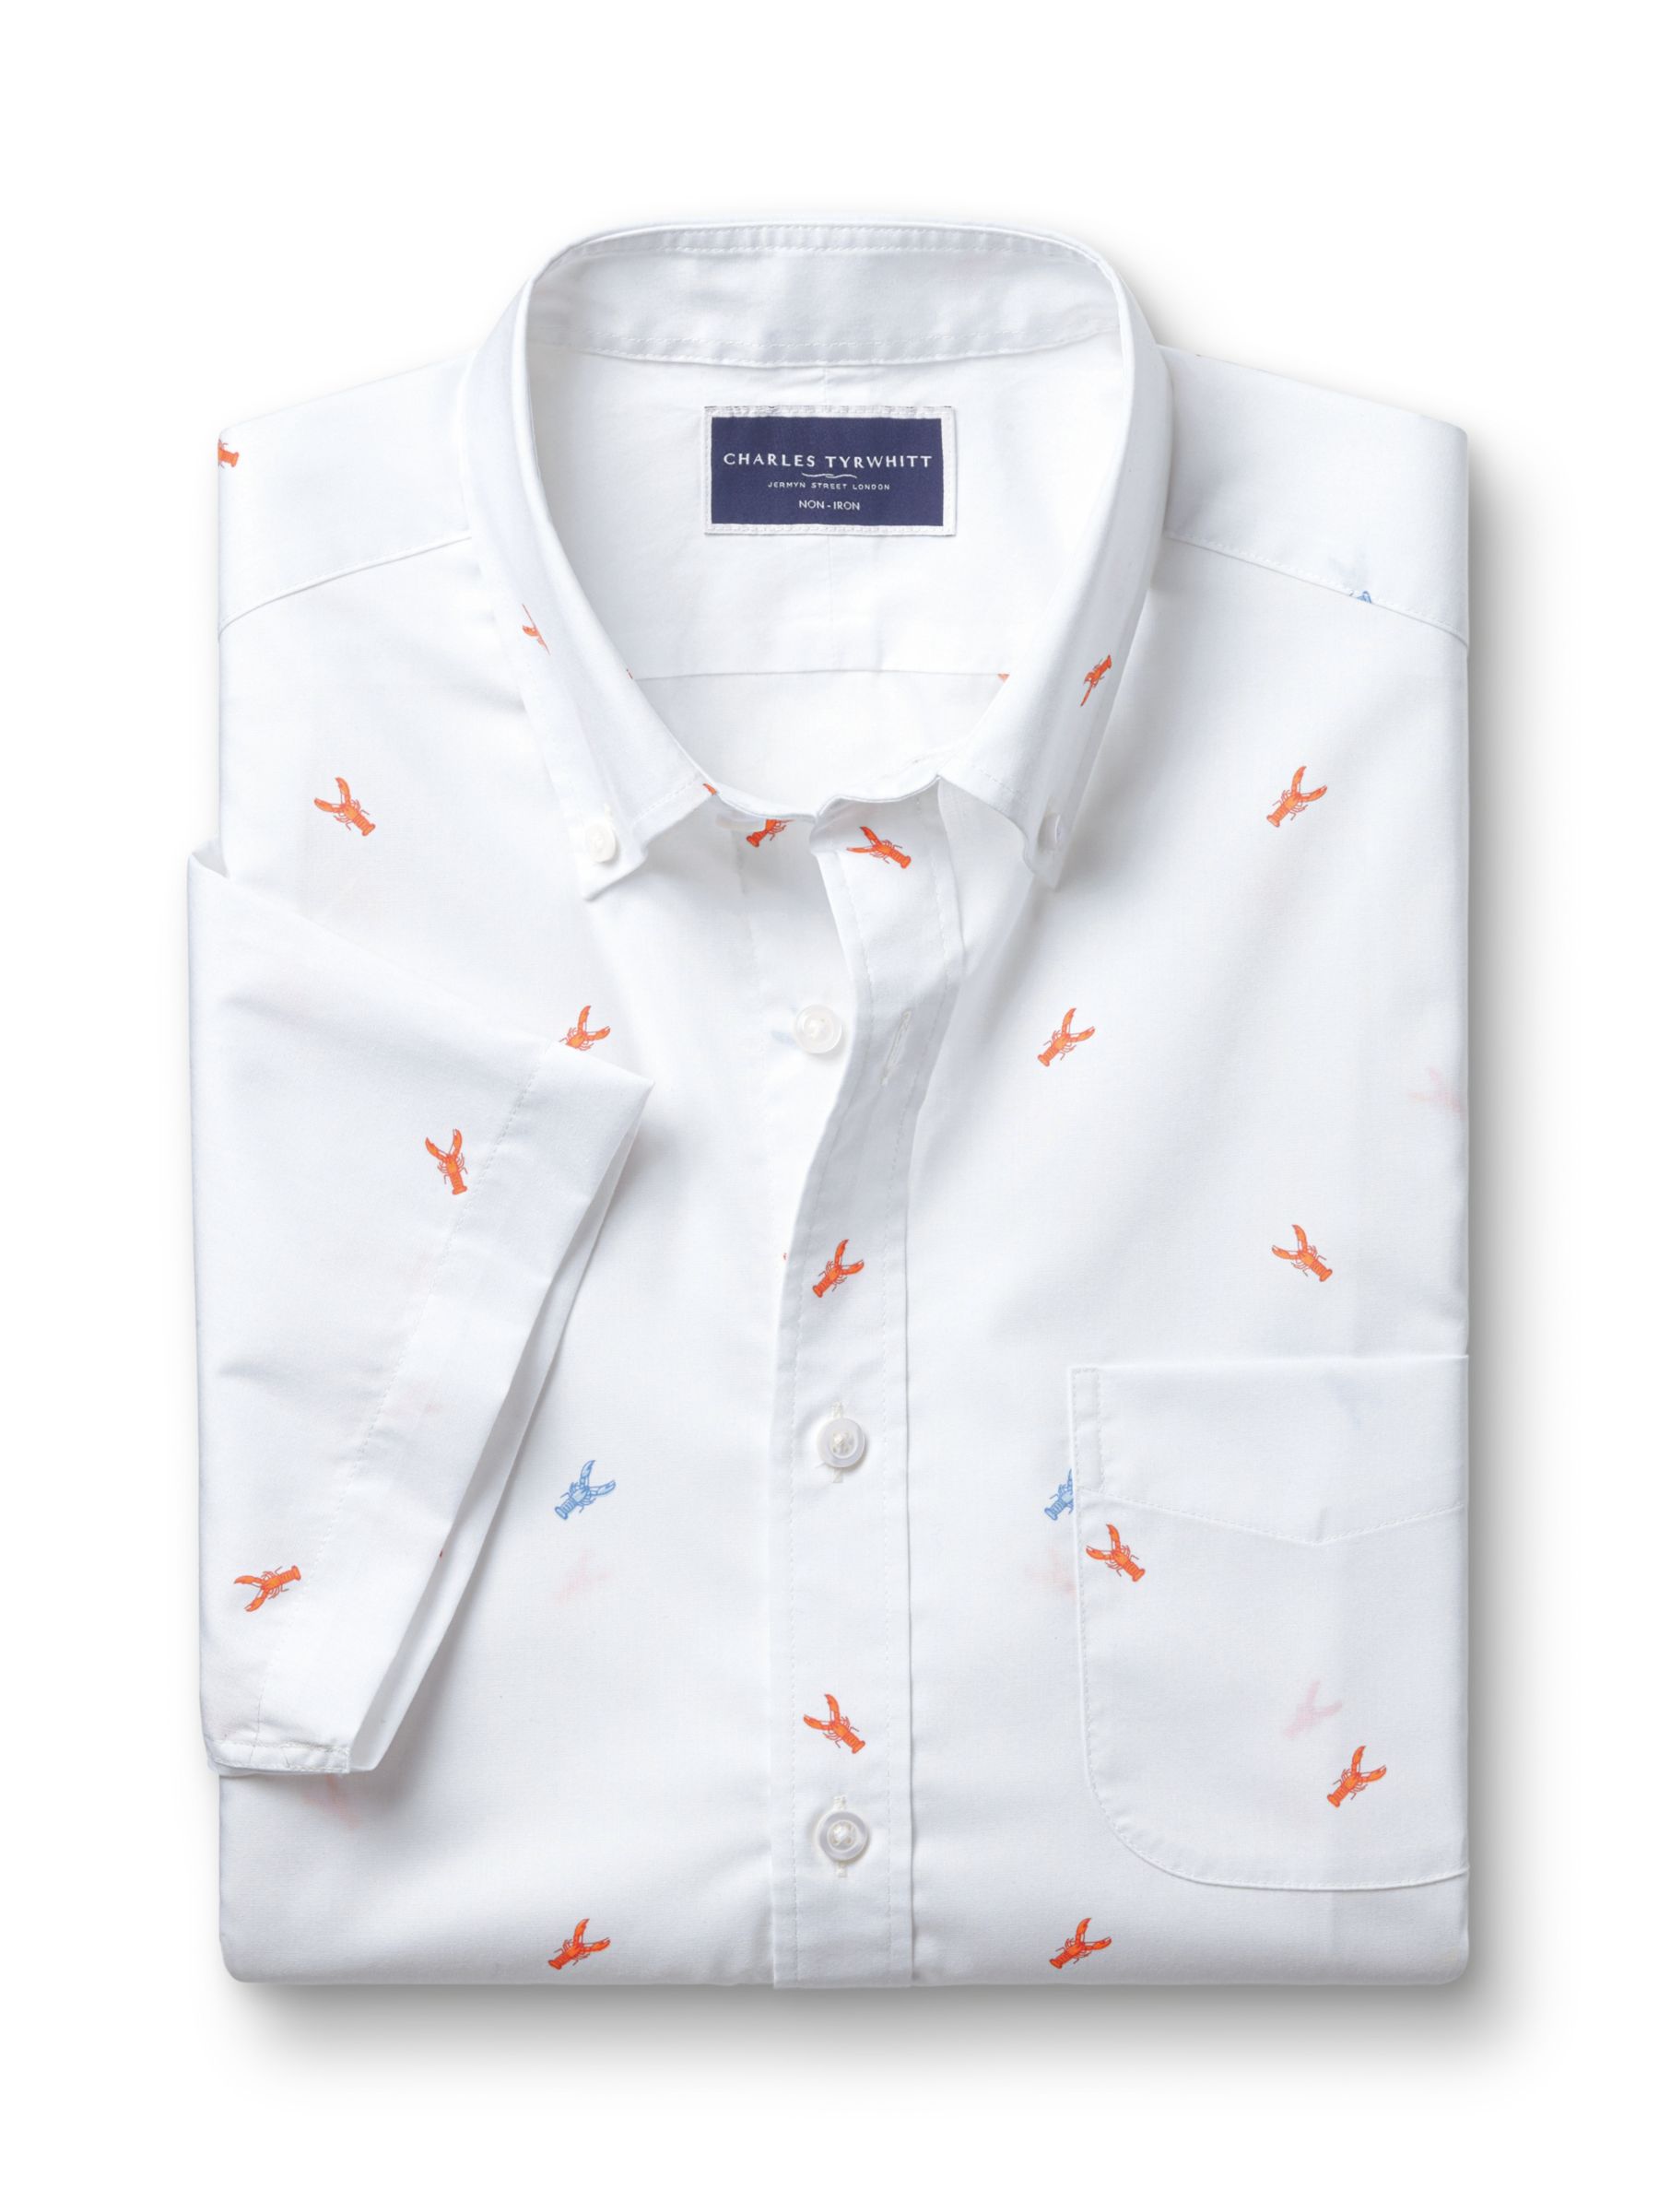 Charles Tyrwhitt Non-Iron Stretch Lobster Print Short Sleeve Shirt, White/Orange, XXL